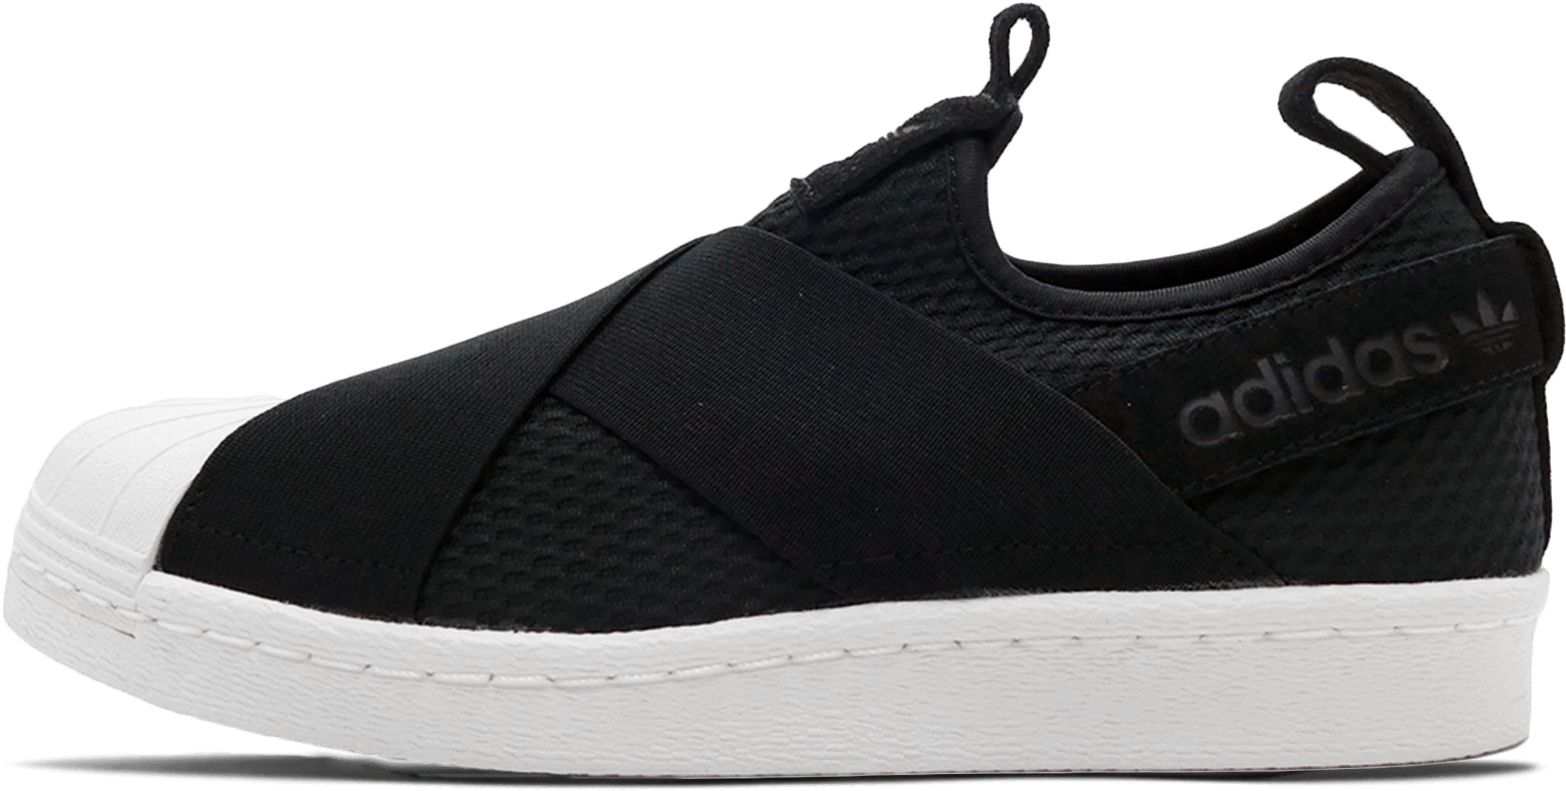 Adidas Black Slip On Sneaker PNG image